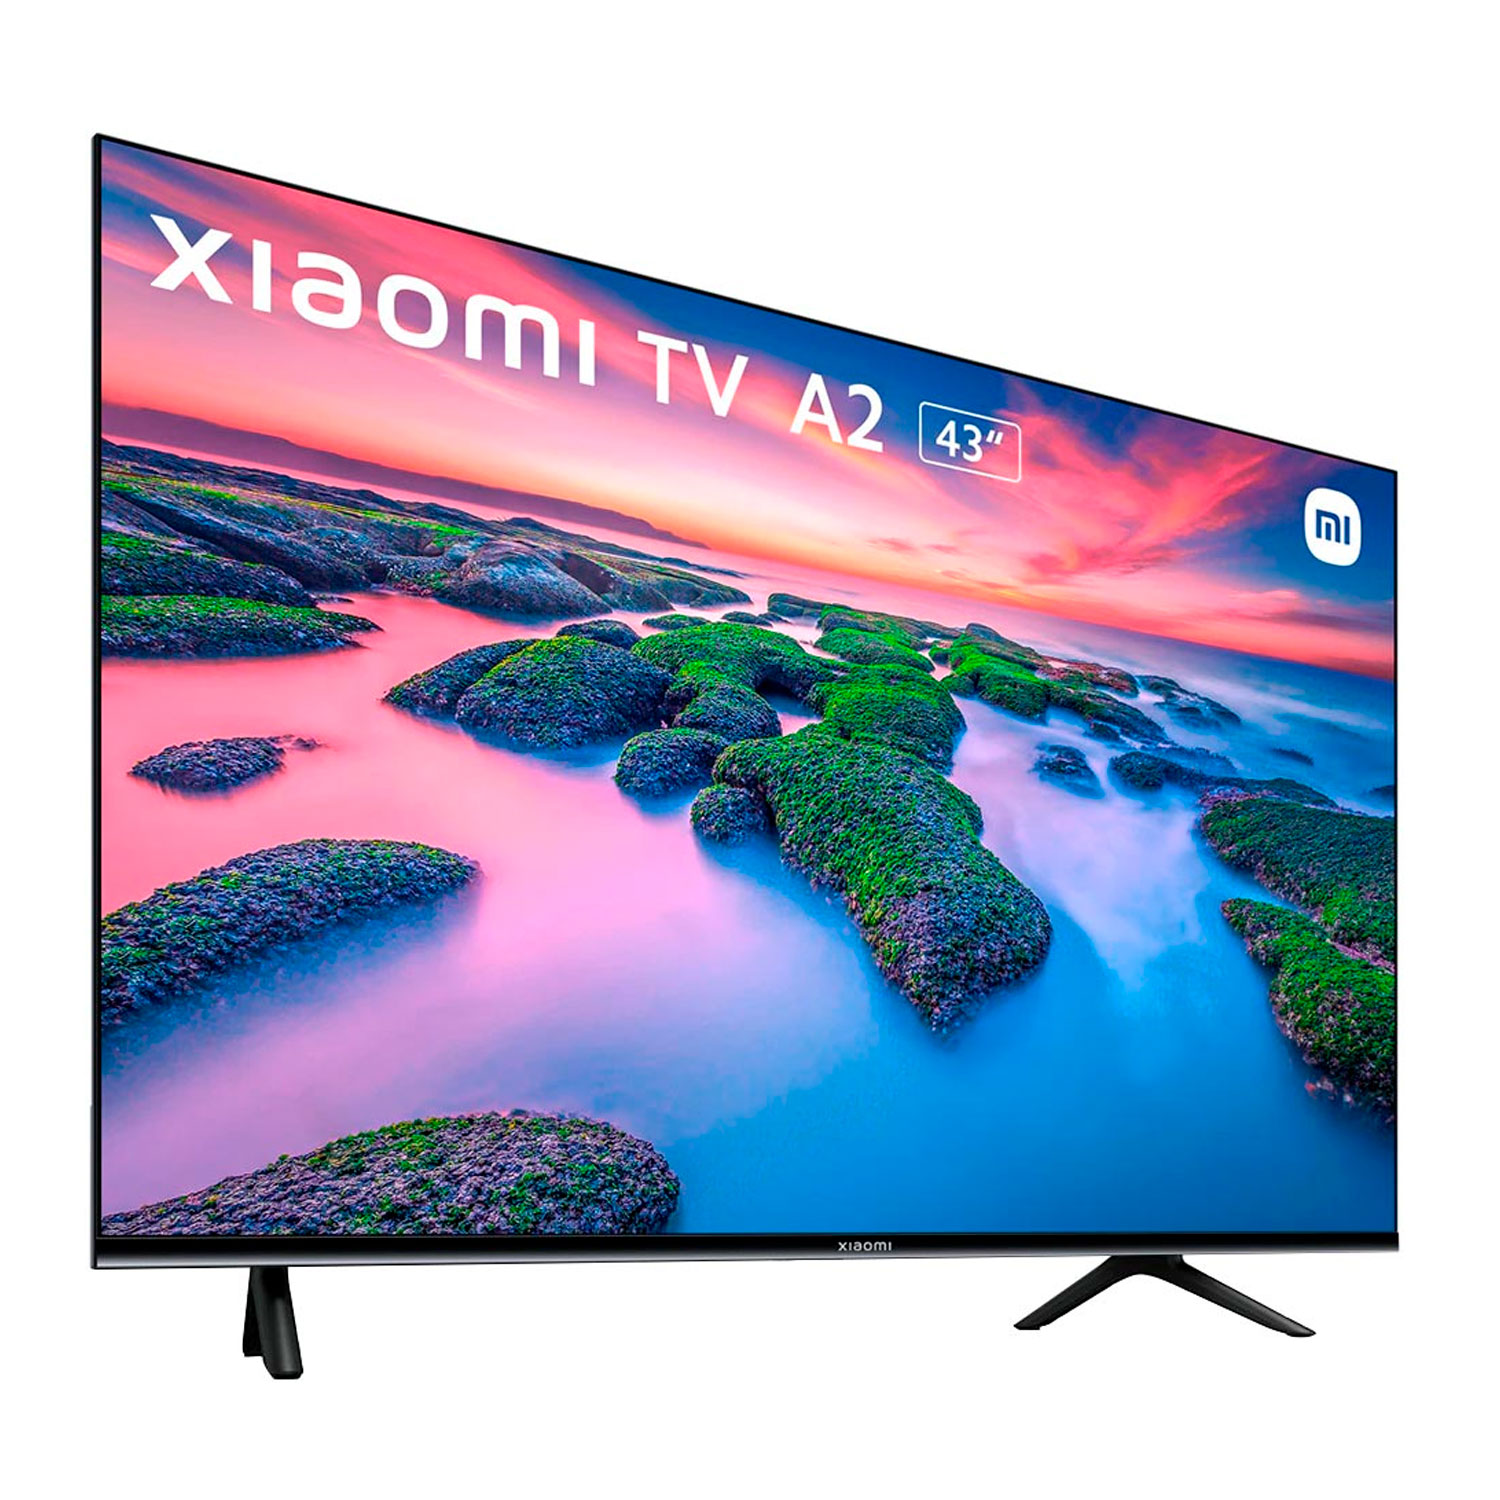 Smart TV Xiaomi MI A2 Series L43M7-ESA 43" Full HD - Preto